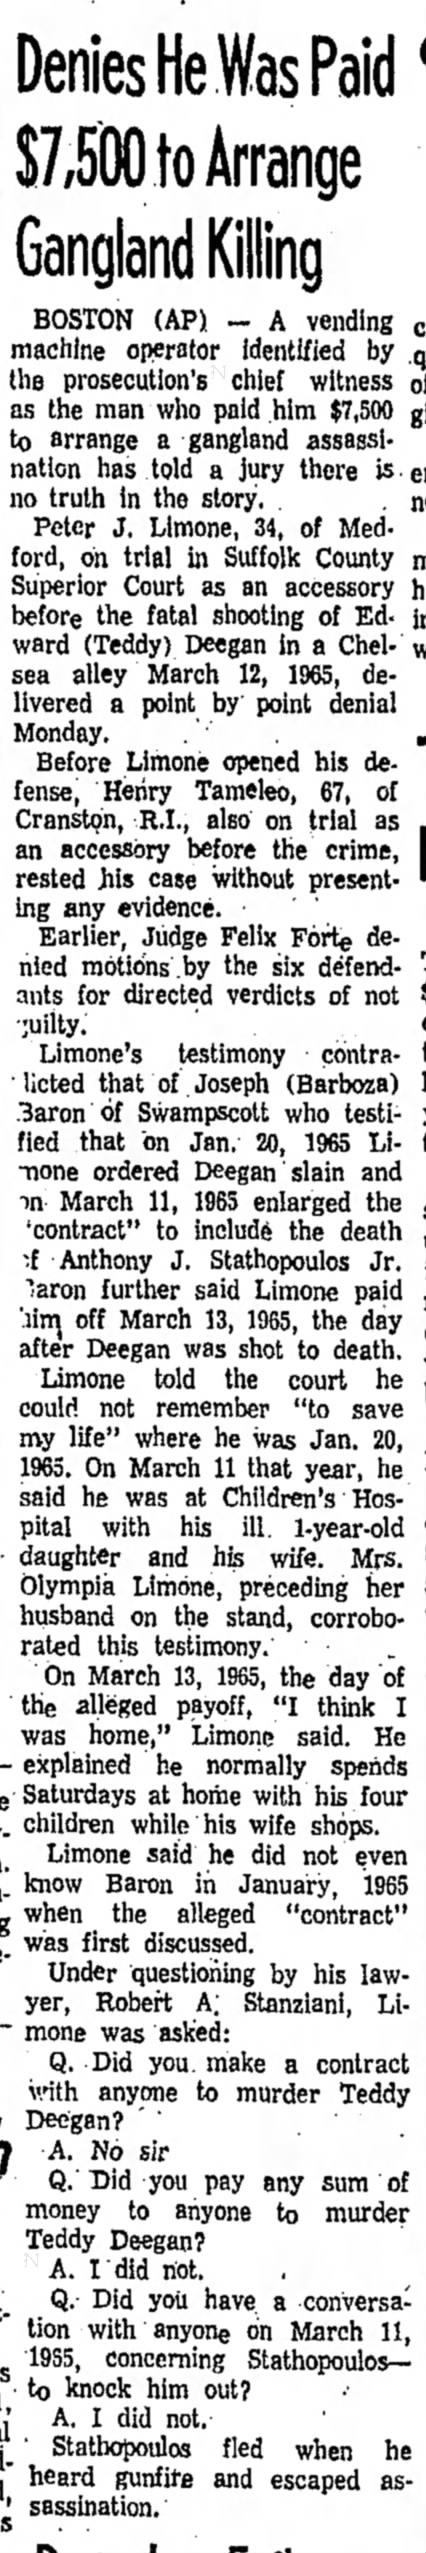 Limone testimony (23 July 1968)